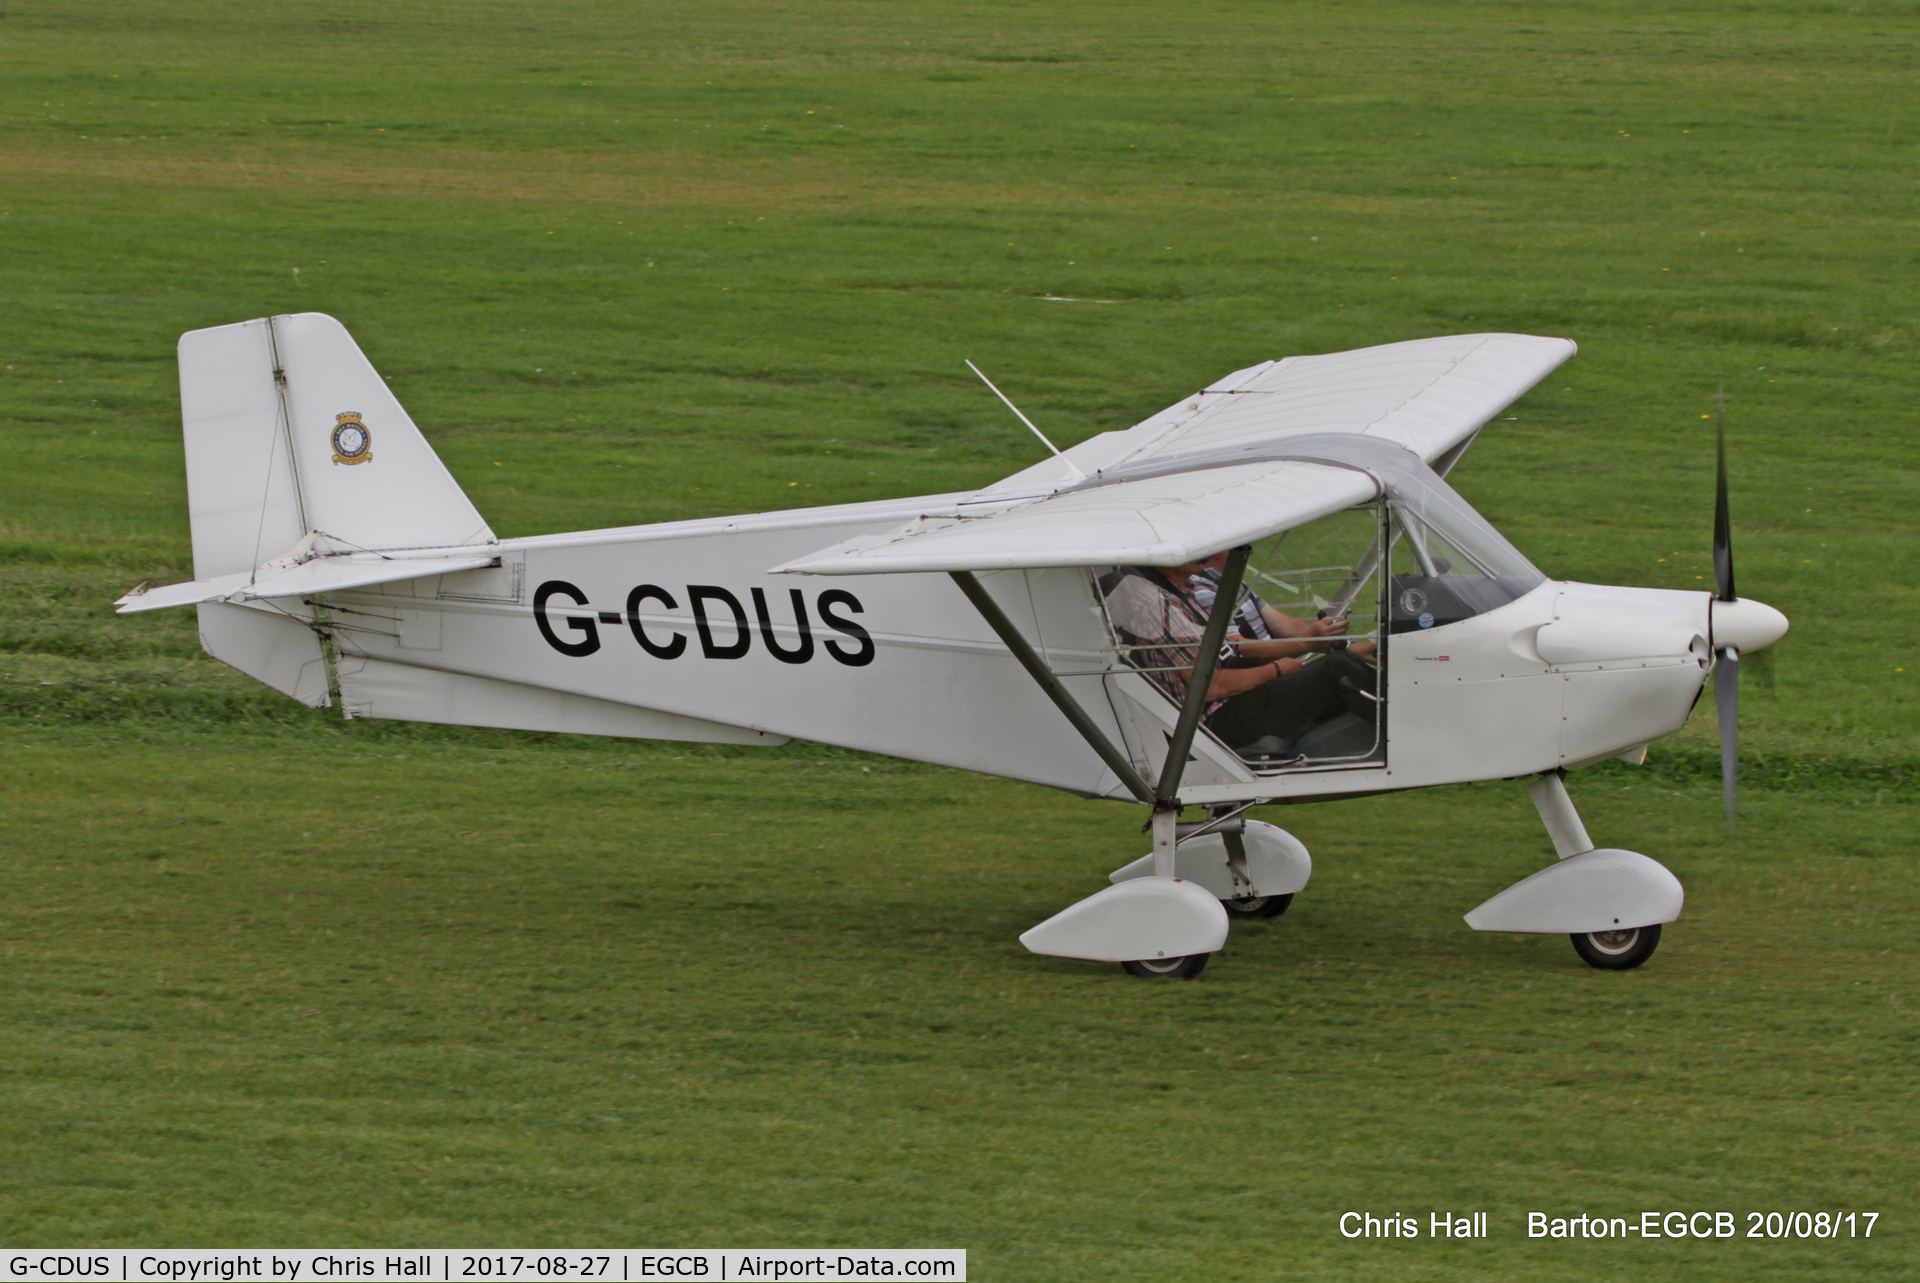 G-CDUS, 2006 Skyranger 912S(1) C/N BMAA/HB/490, at Barton